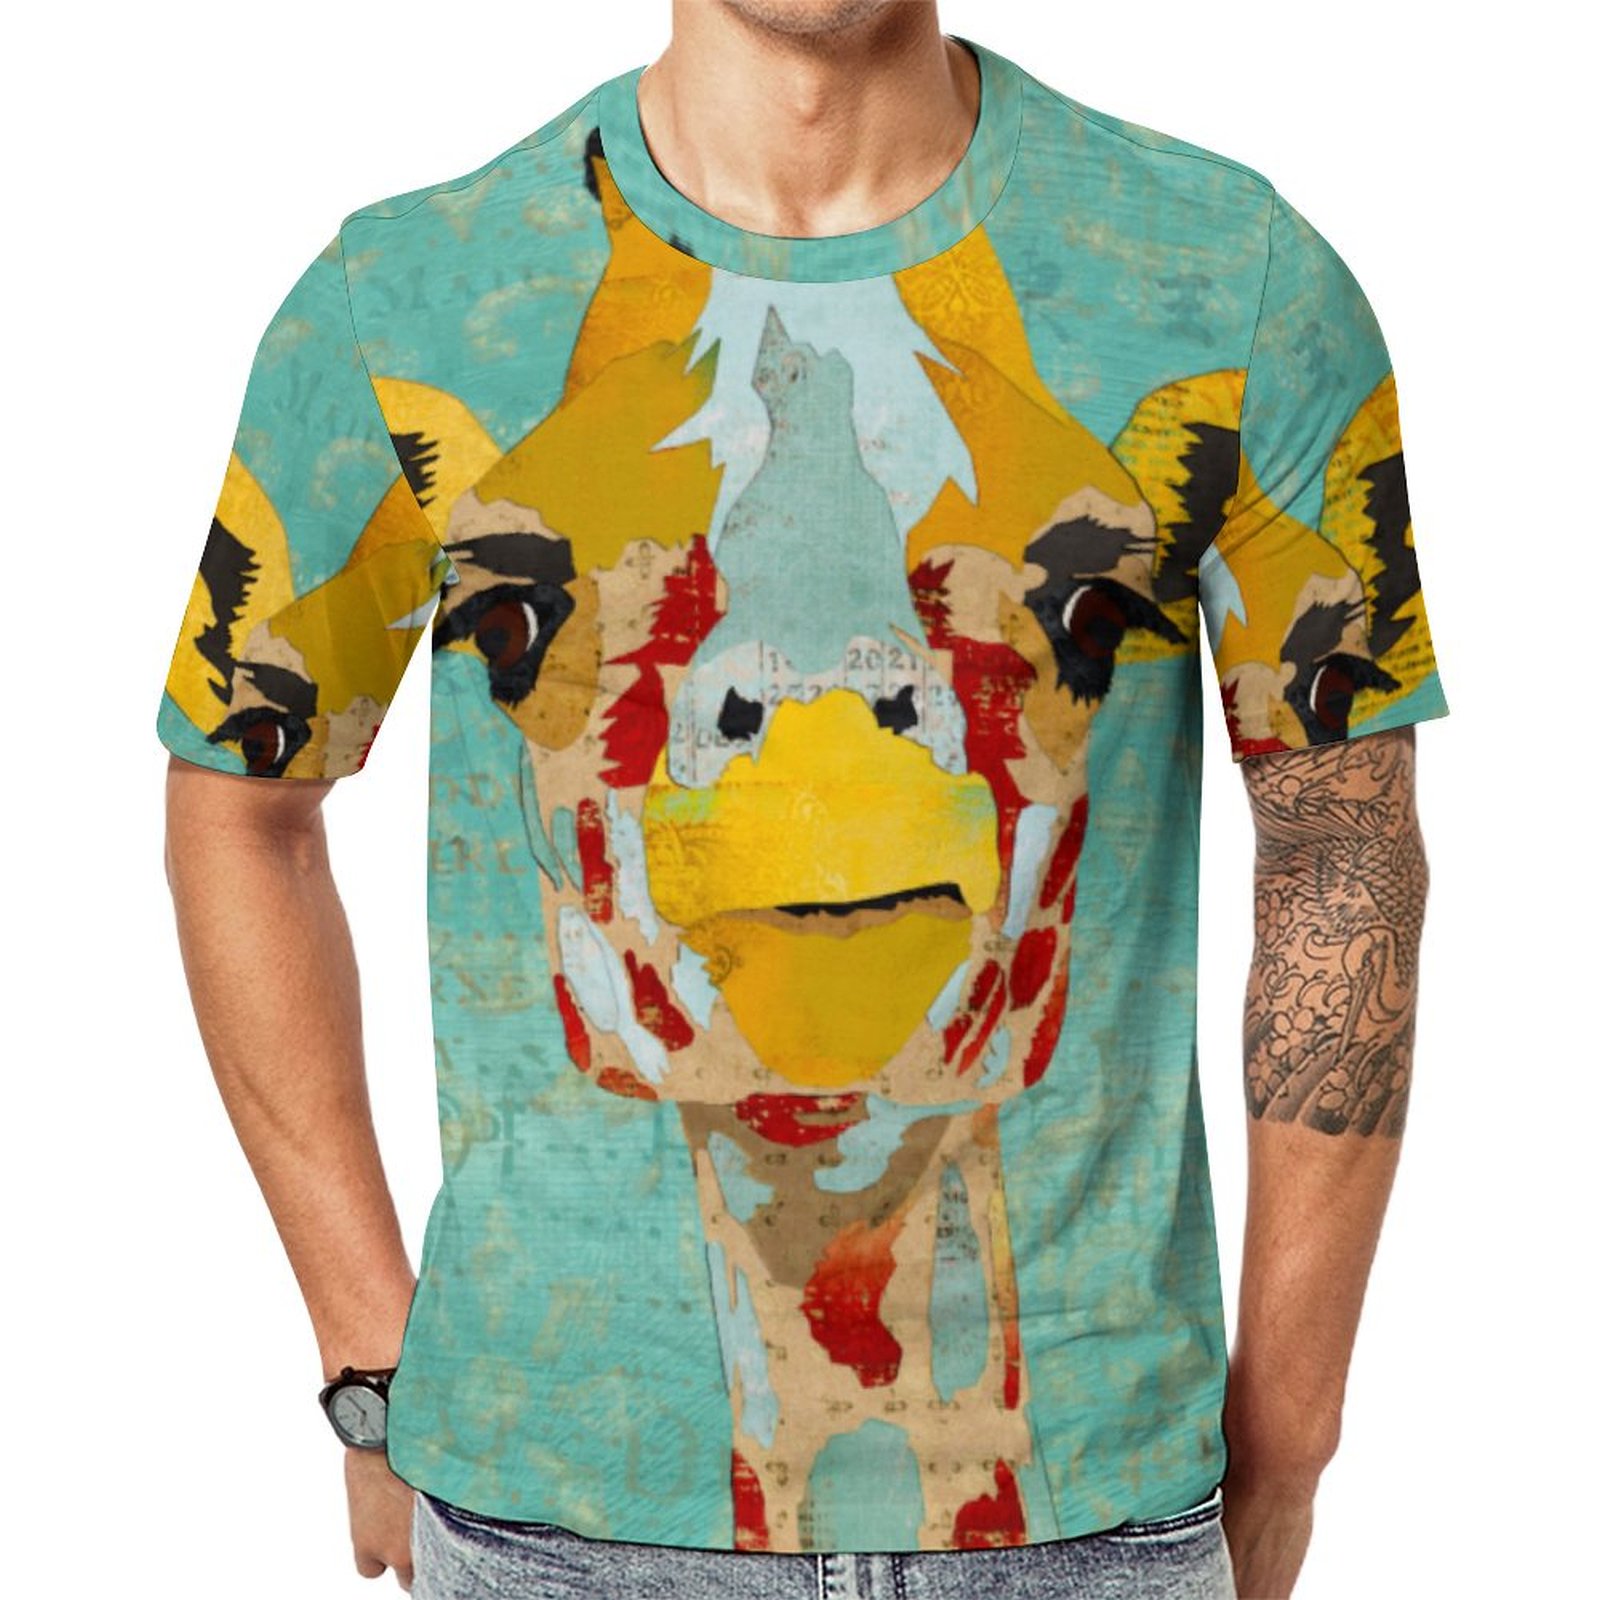 Gold Peeking Giraffes Mojos On Green Short Sleeve Print Unisex Tshirt Summer Casual Tees for Men and Women Coolcoshirts